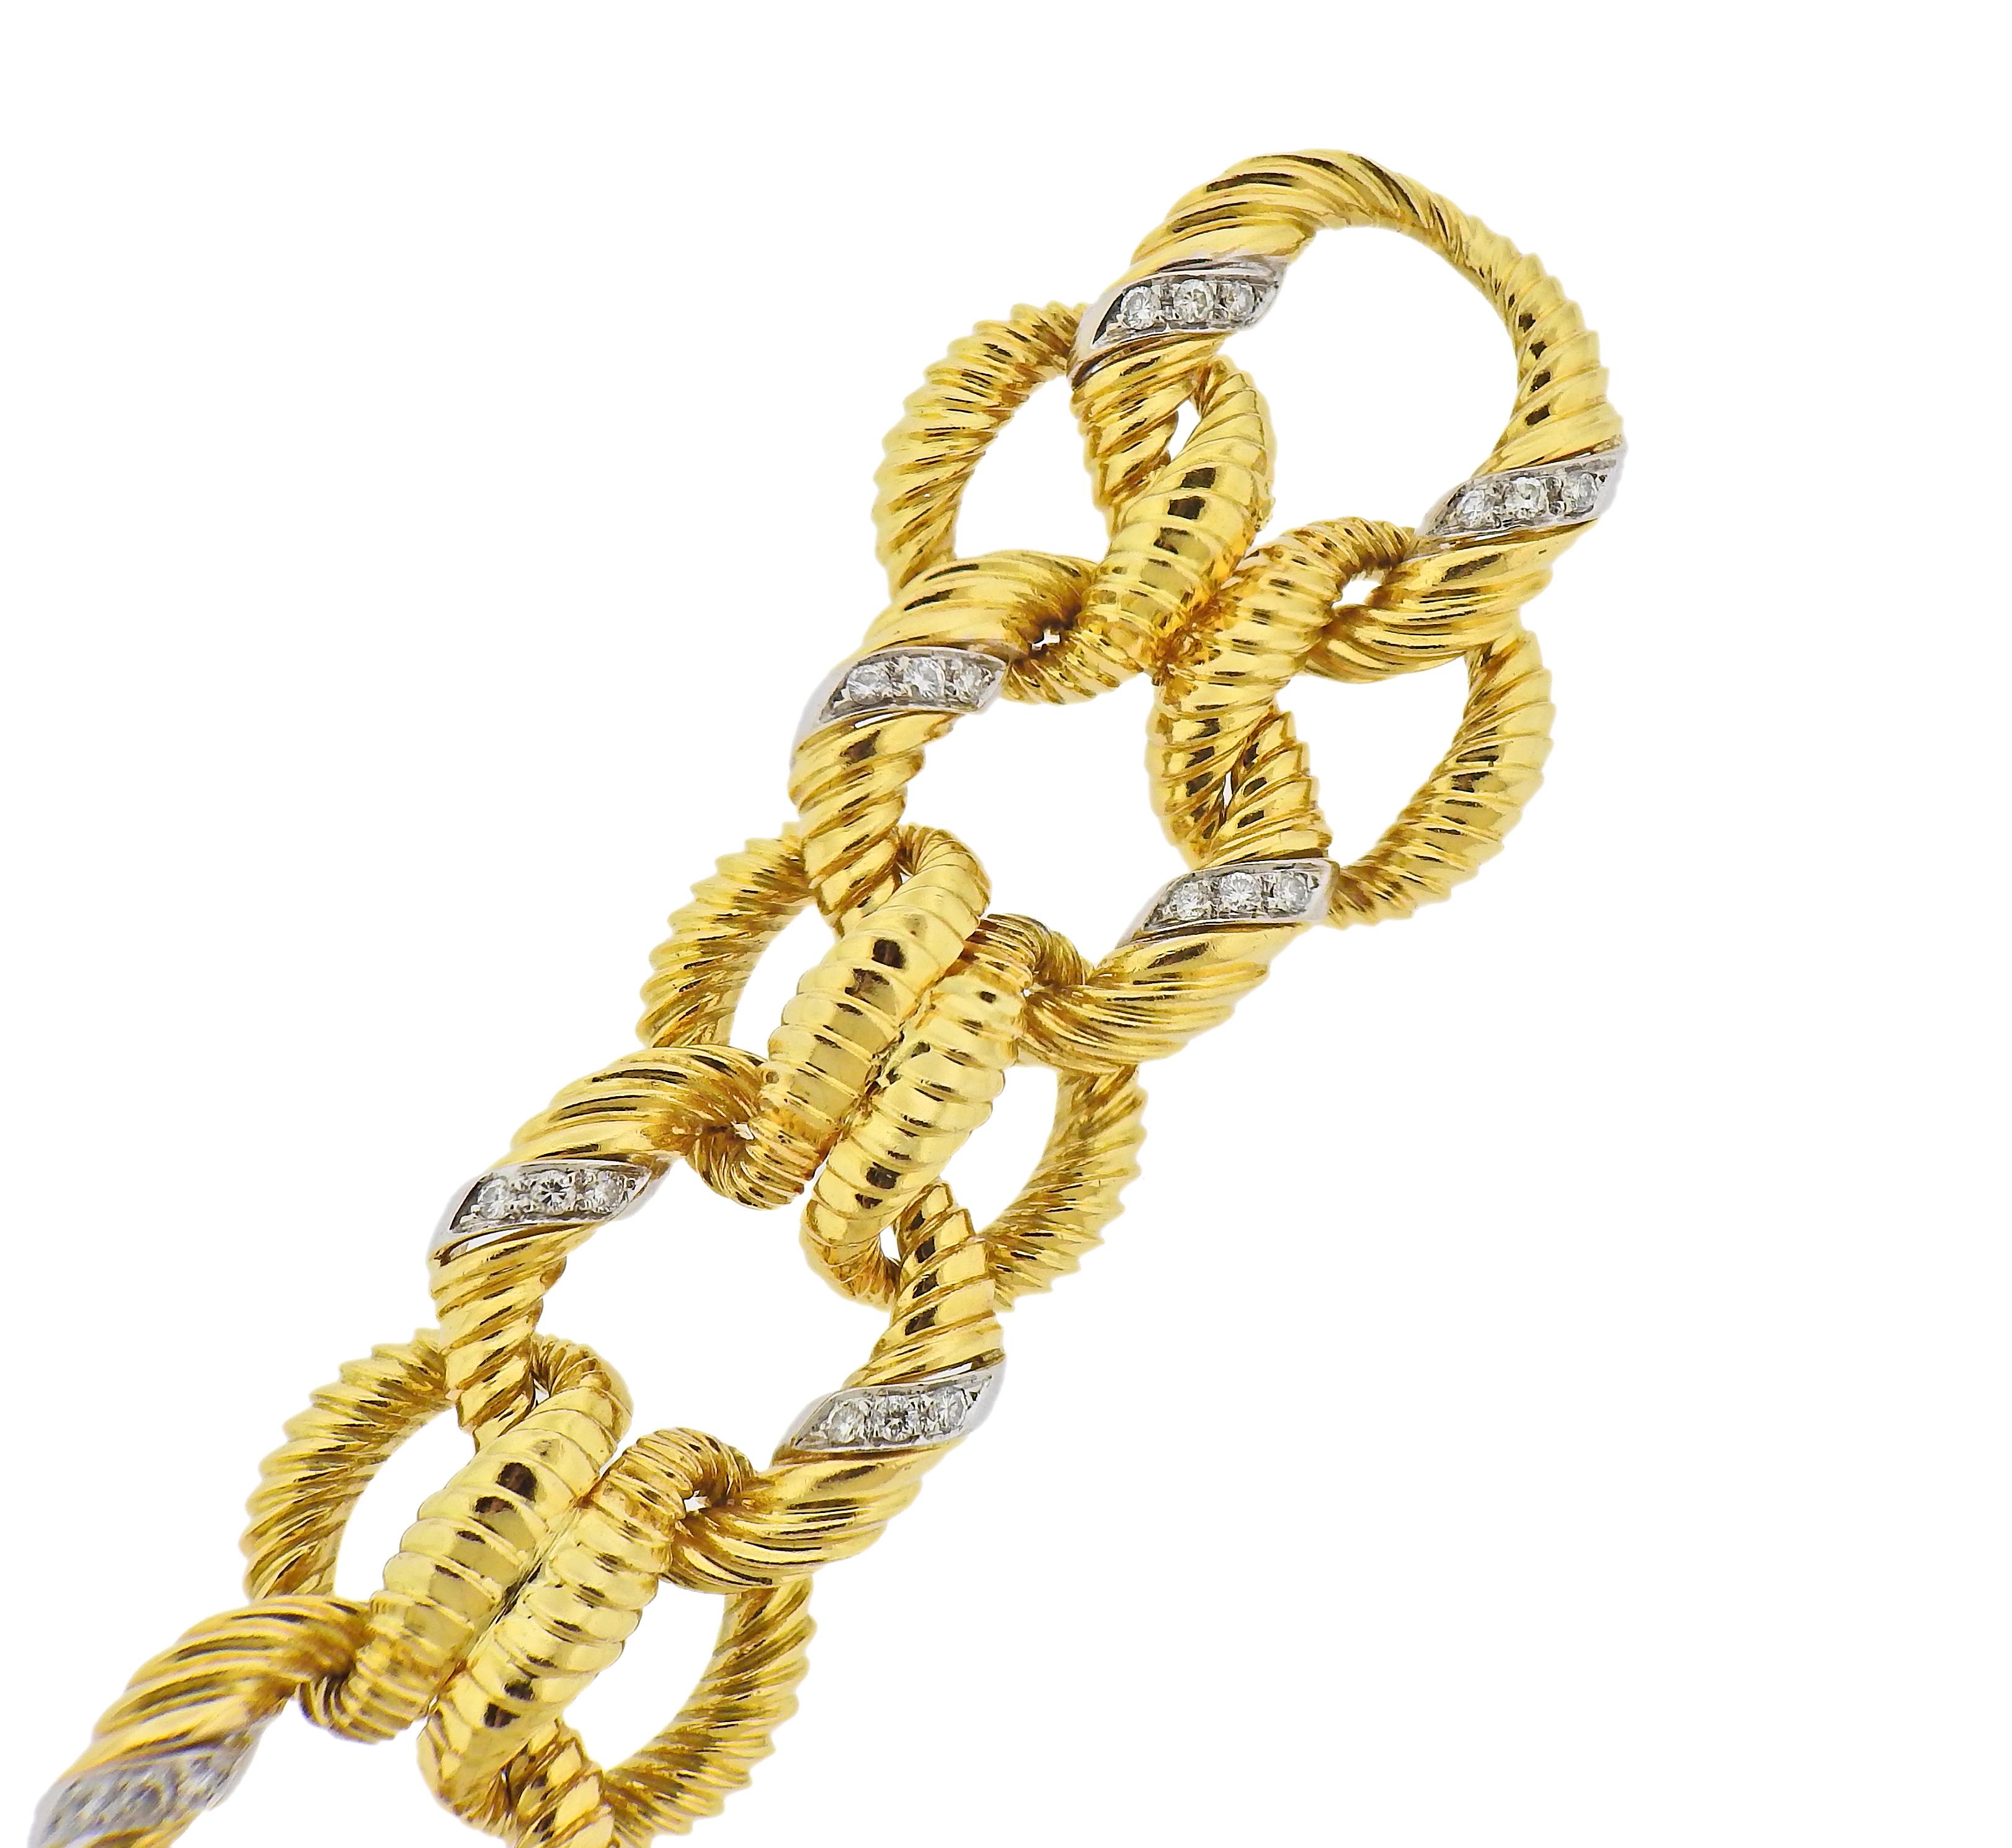 Chunky circa 1960s 18k gold bracelet with approximately 0.90ctw in diamonds. Bracelet is 8.75